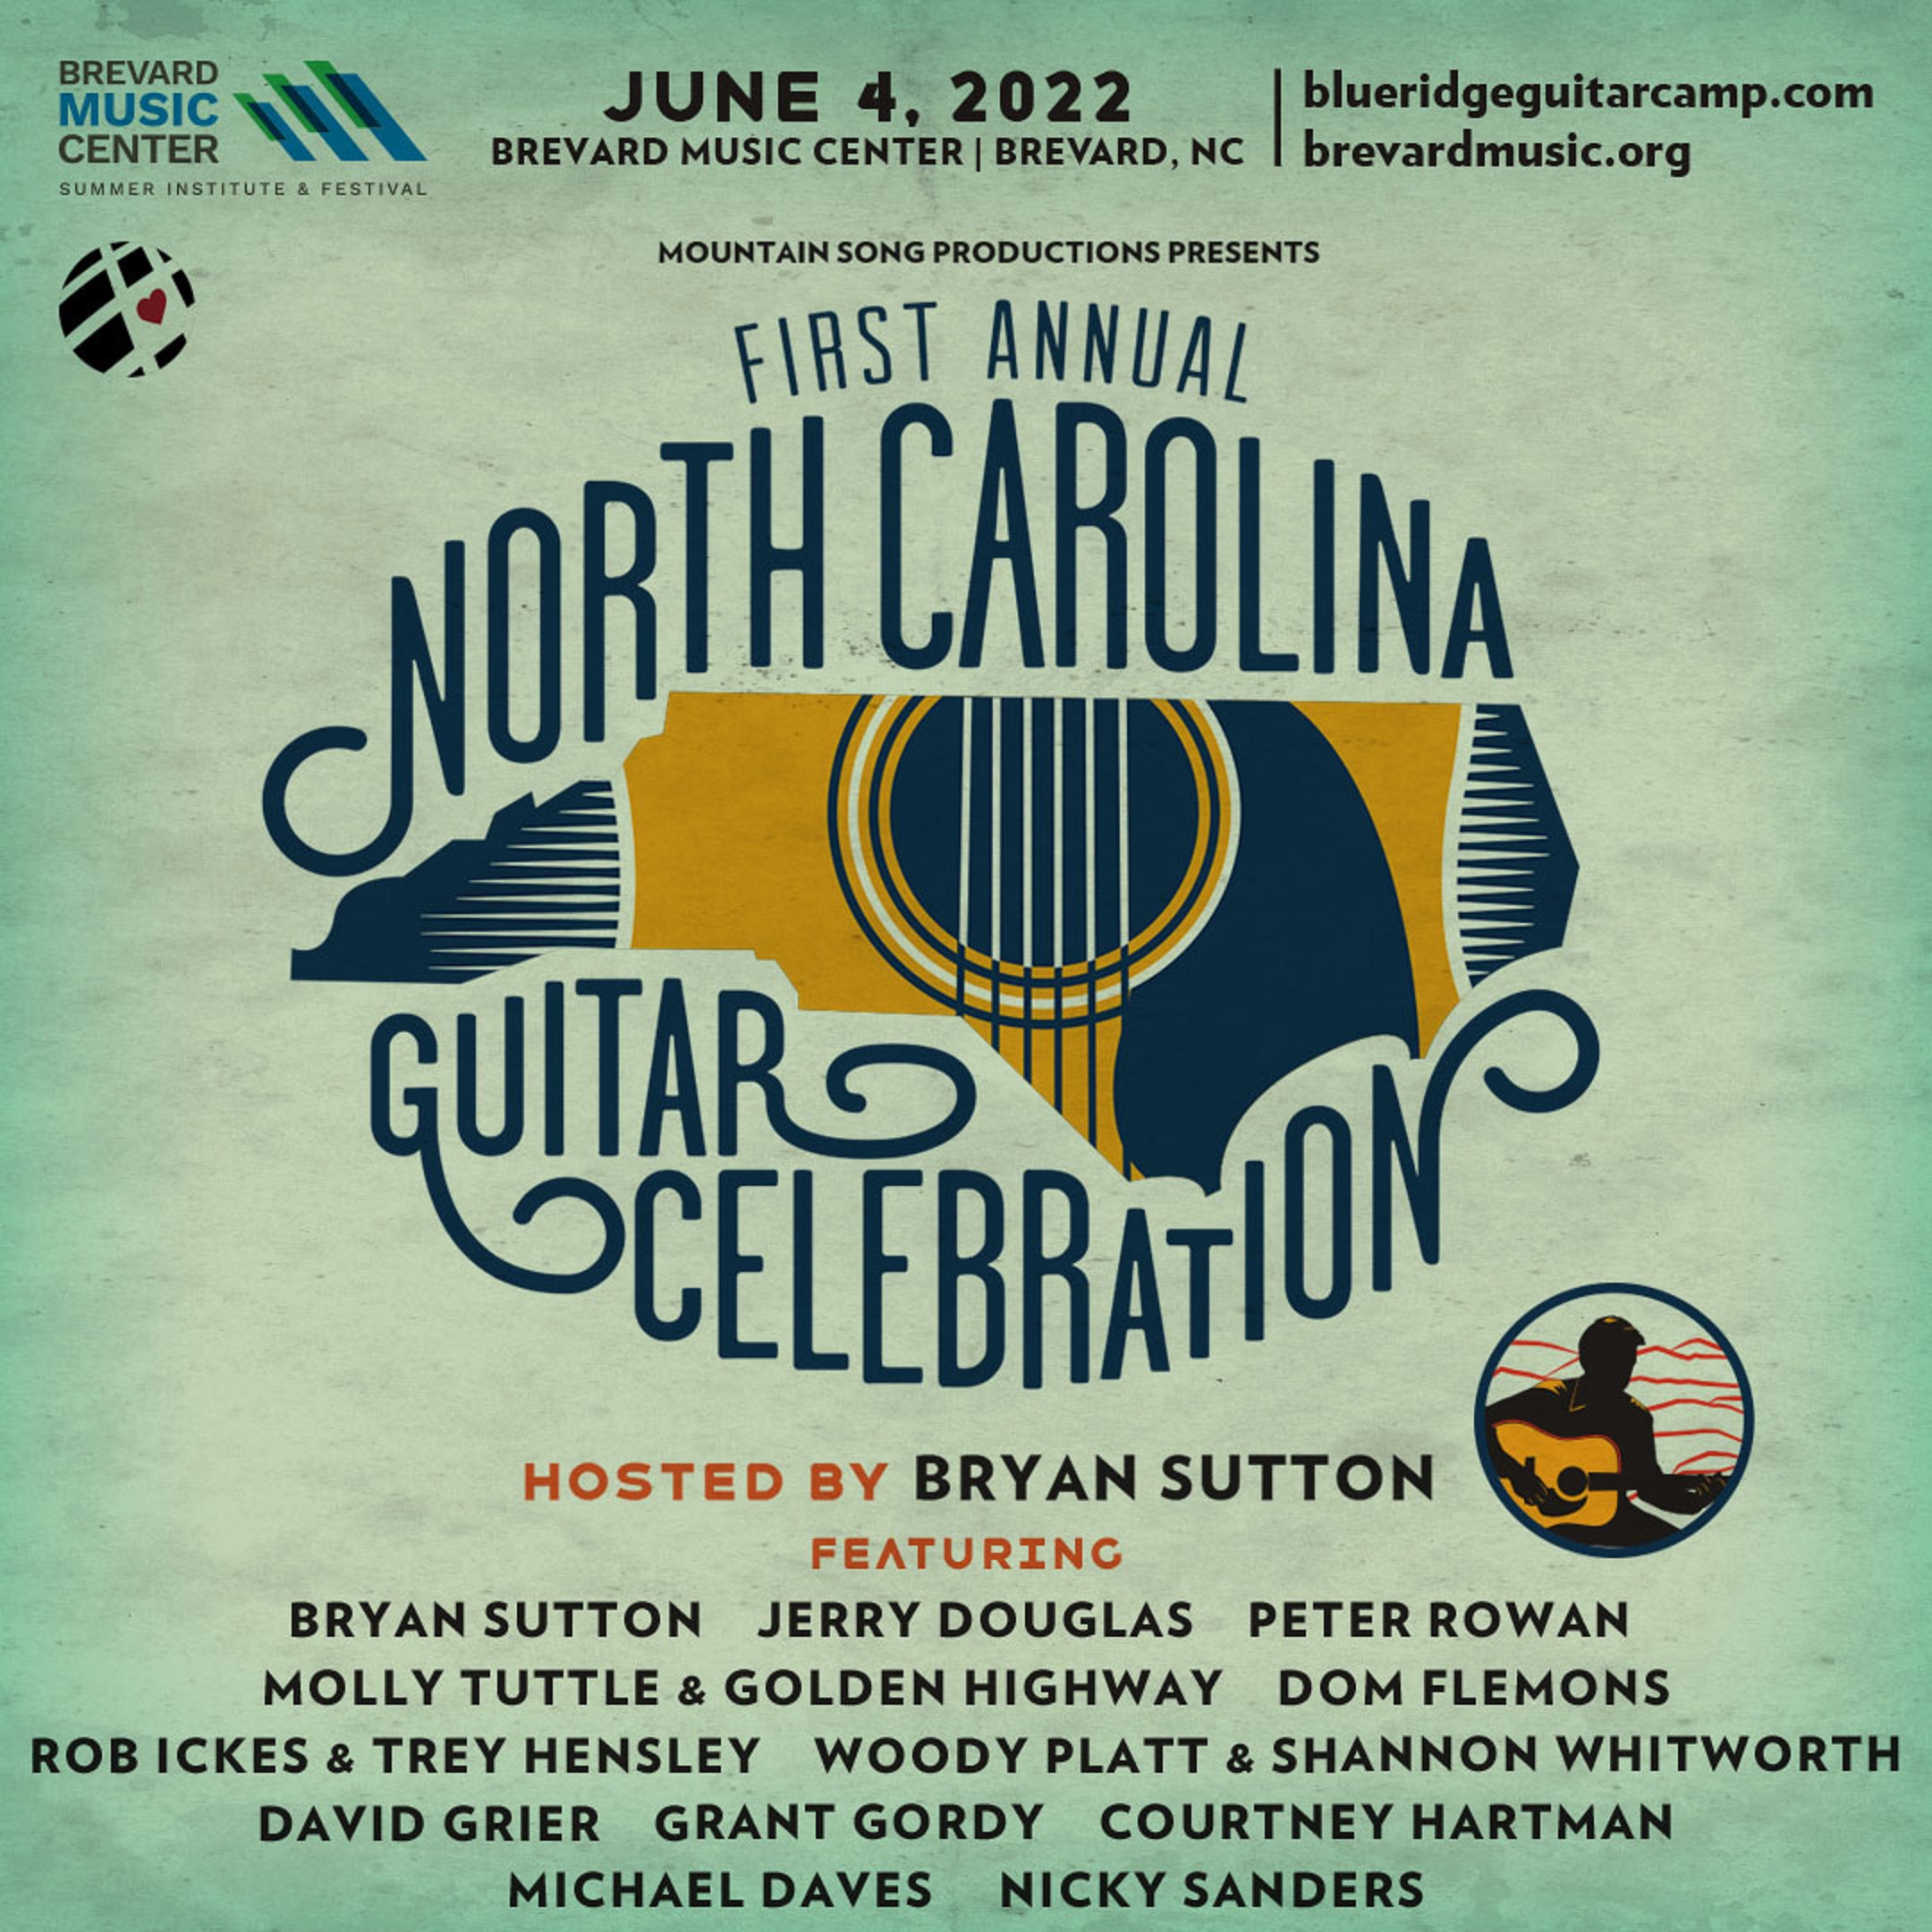 Announcing BRYAN SUTTON'S NORTH CAROLINA GUITAR CELEBRATION June 4, 2022 at Brevard Music Center